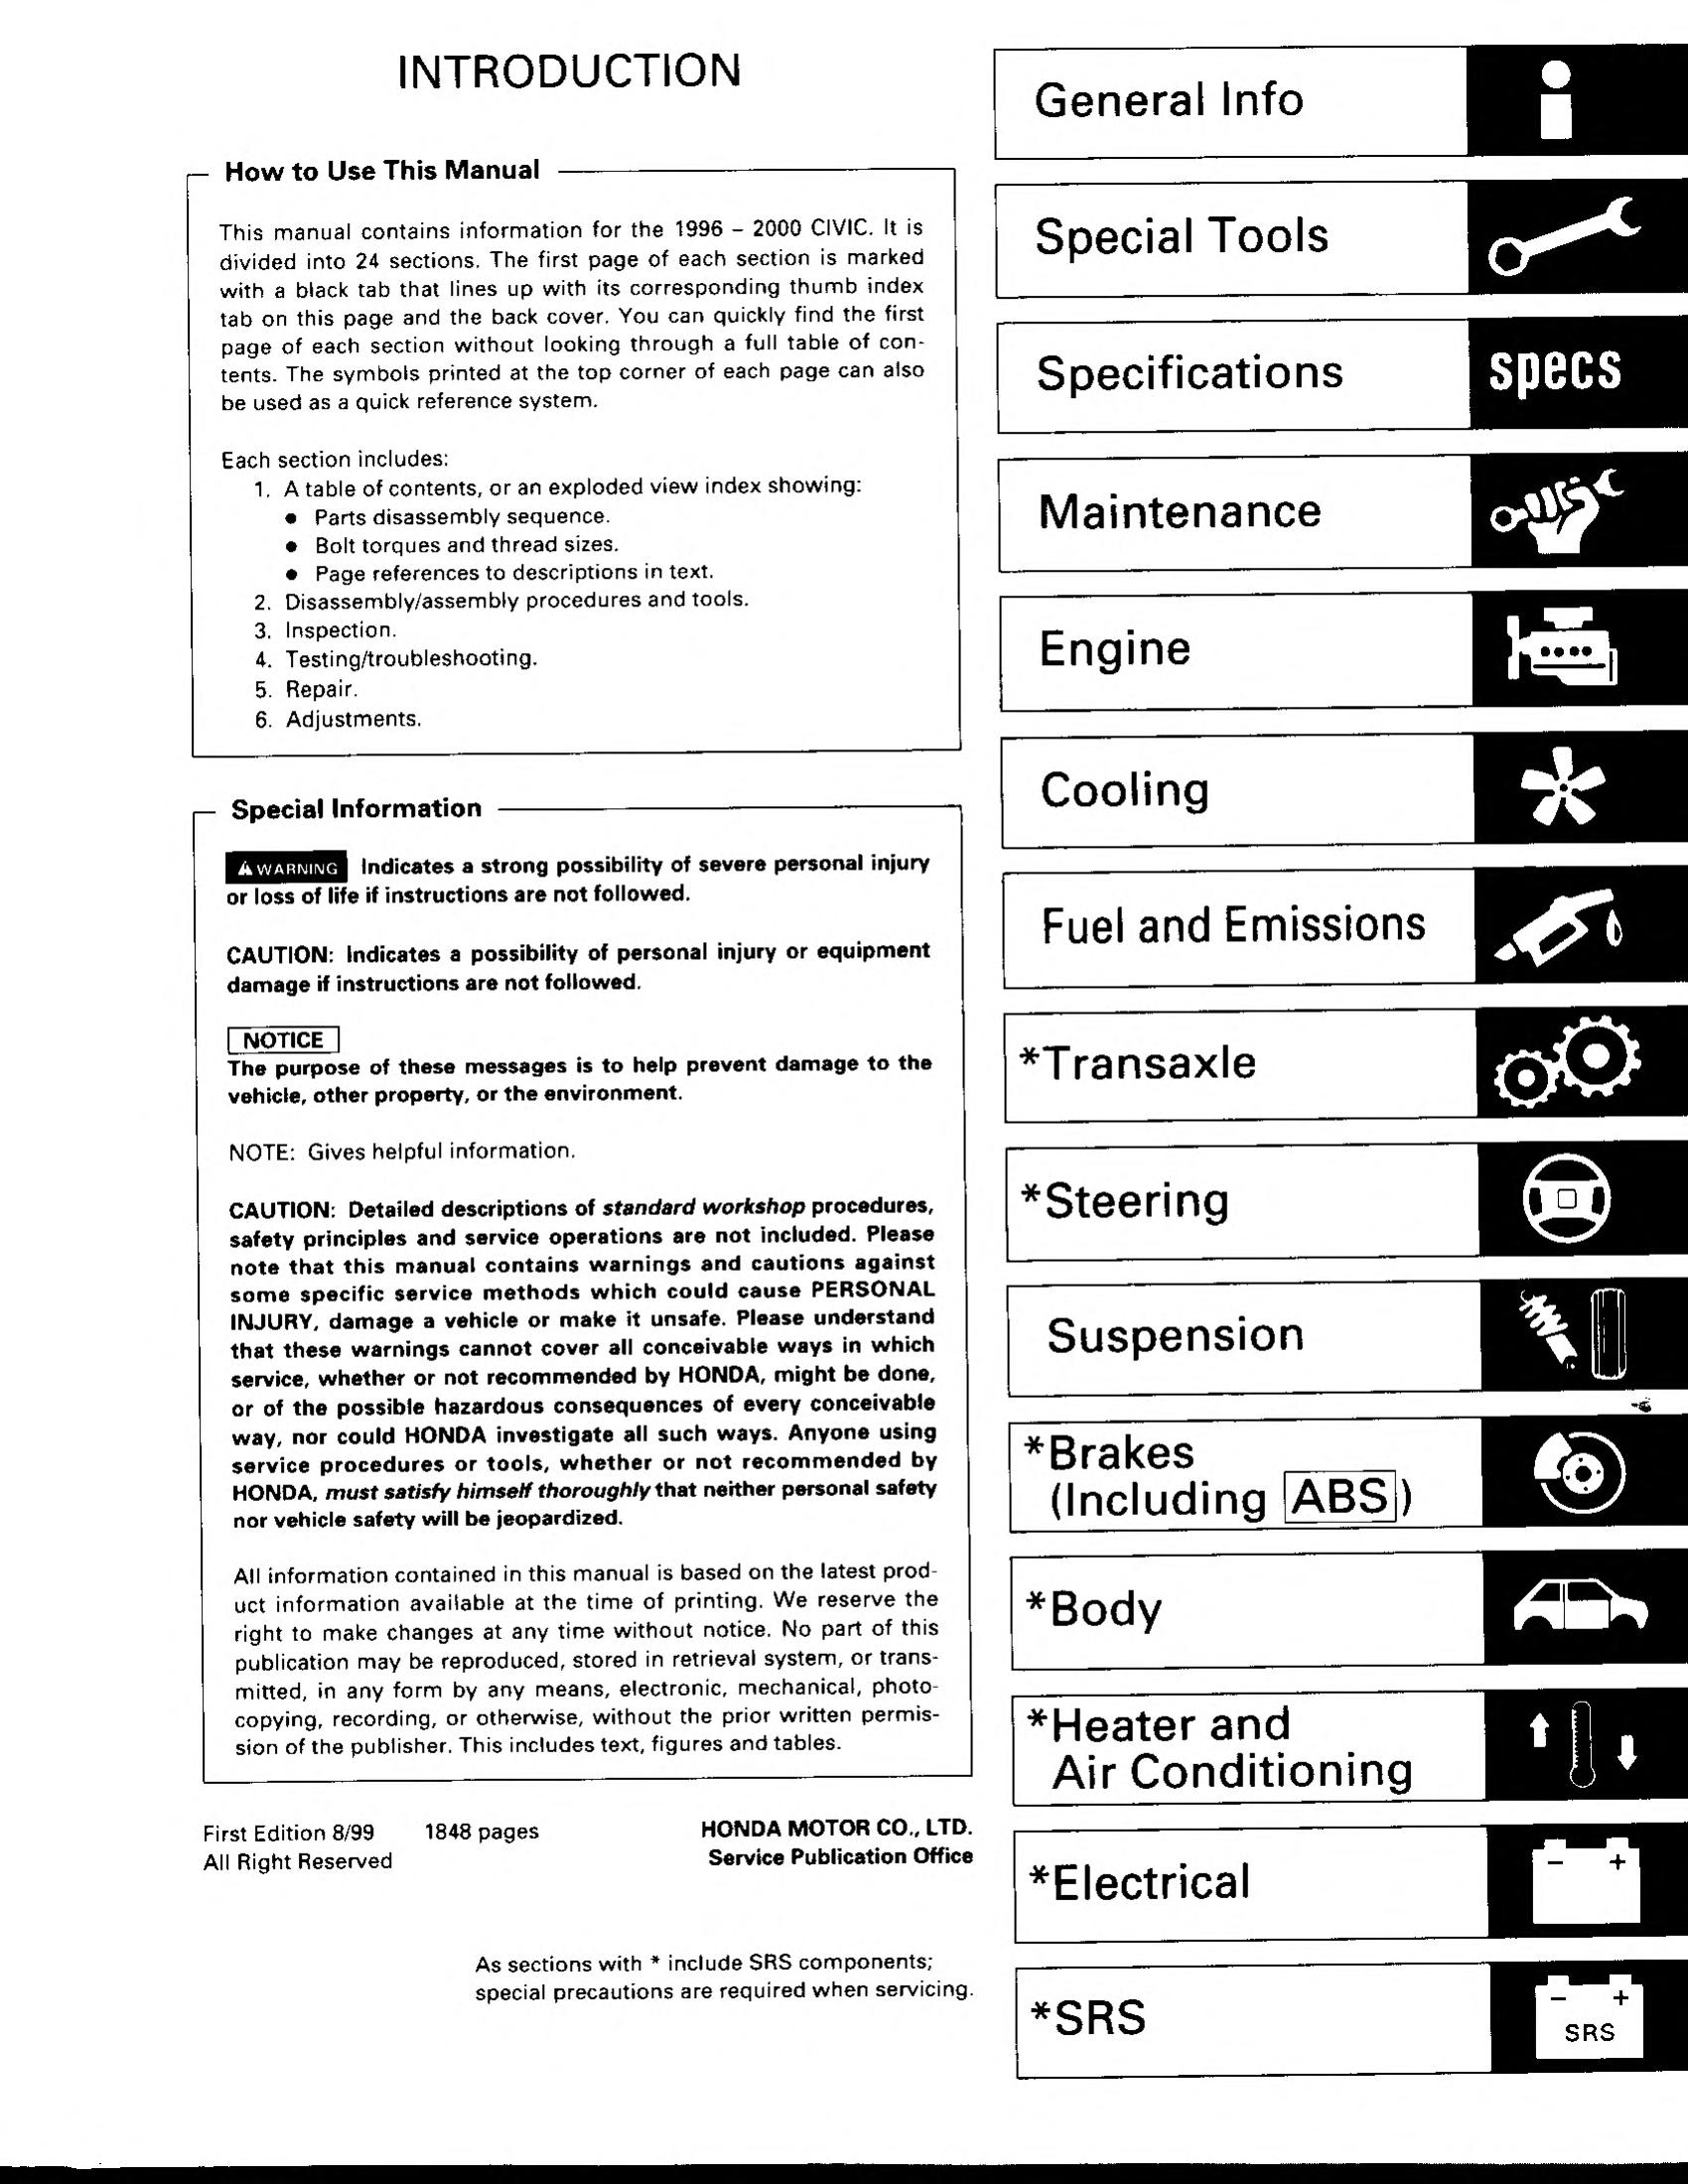 Honda Civic 1996-2000 Service Manual : Honda Motor Co : Free Download,  Borrow, and Streaming : Internet Archive